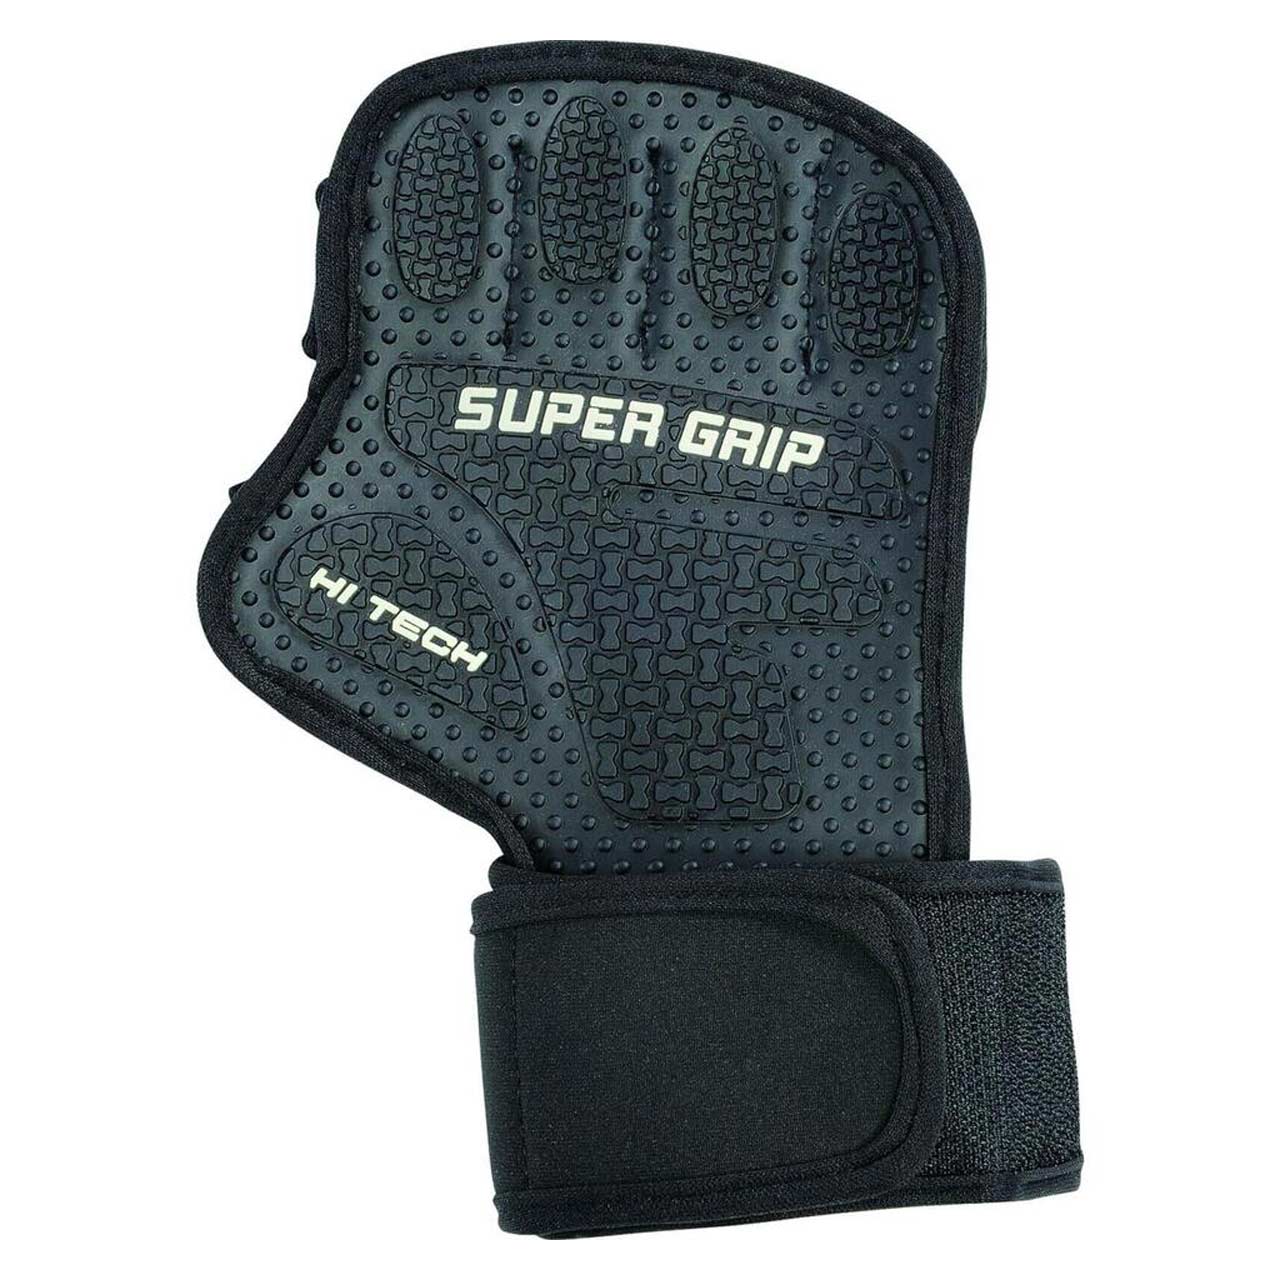 Super Grip Pad